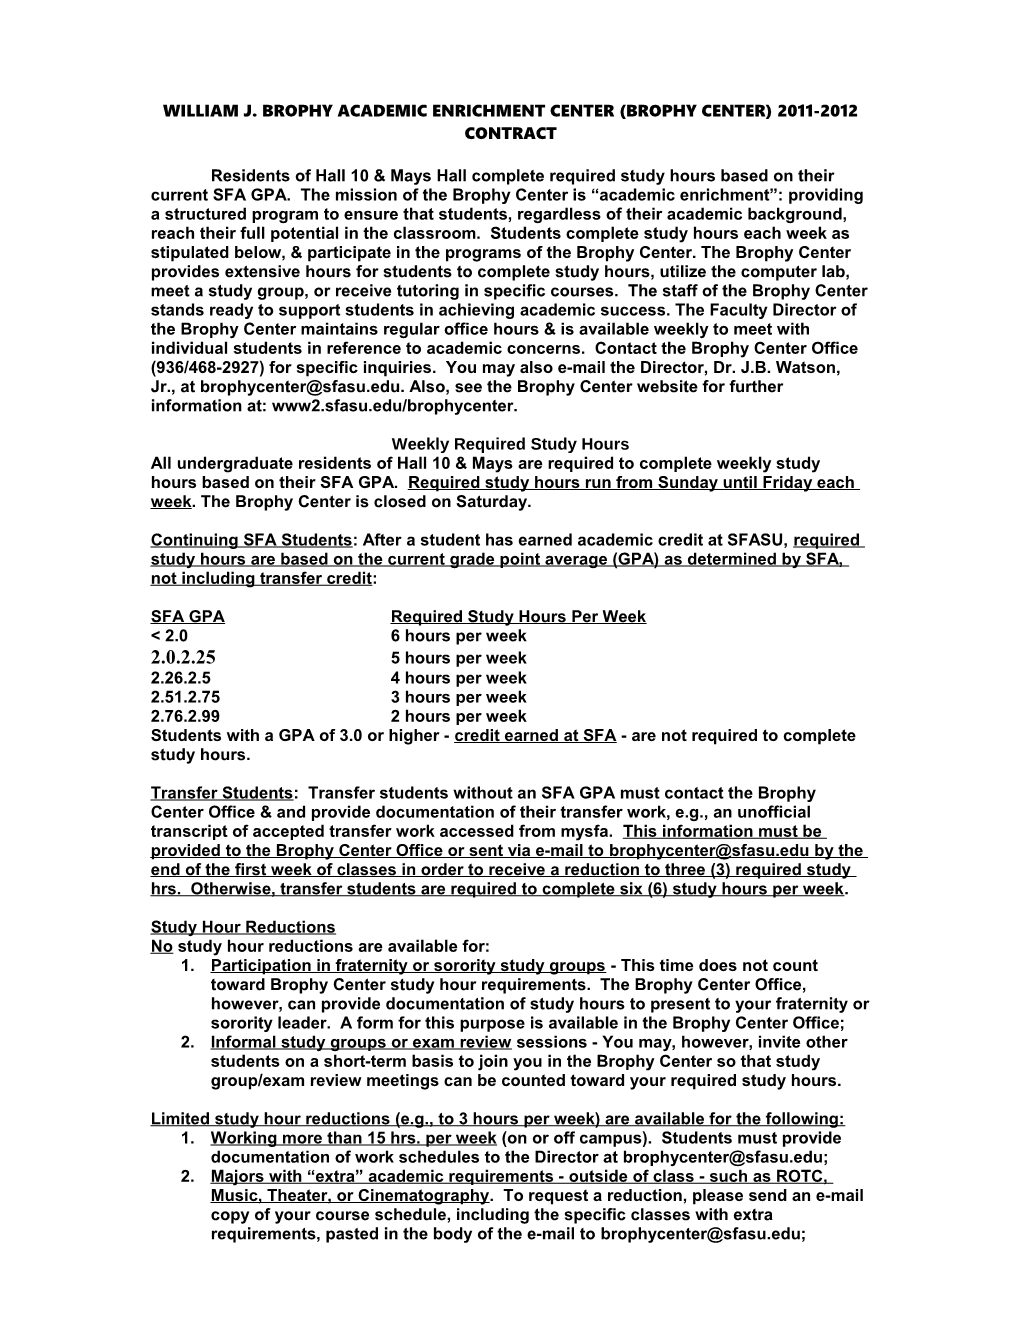 William J. Brophy Academic Enrichment Center (Brophy Center) 2011-2012 Contract